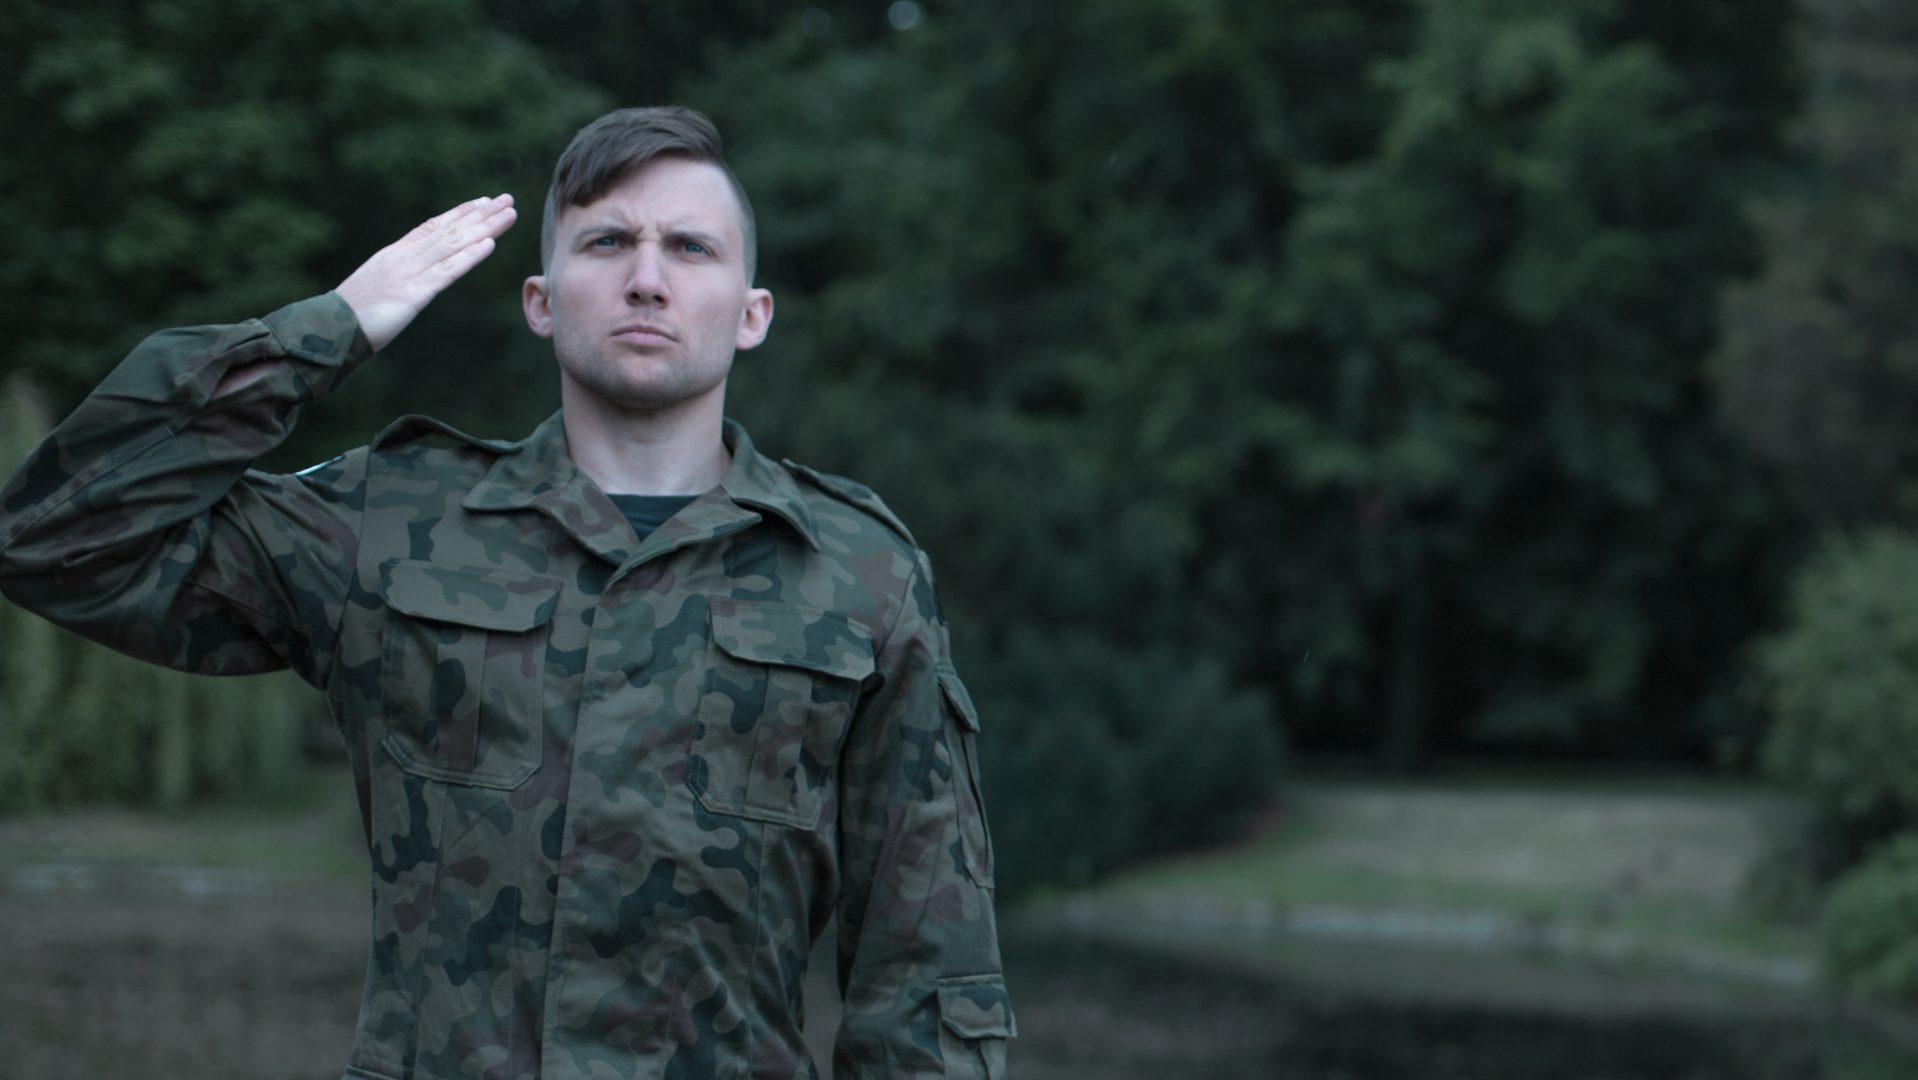 Ssoldier wearing military uniform saluting